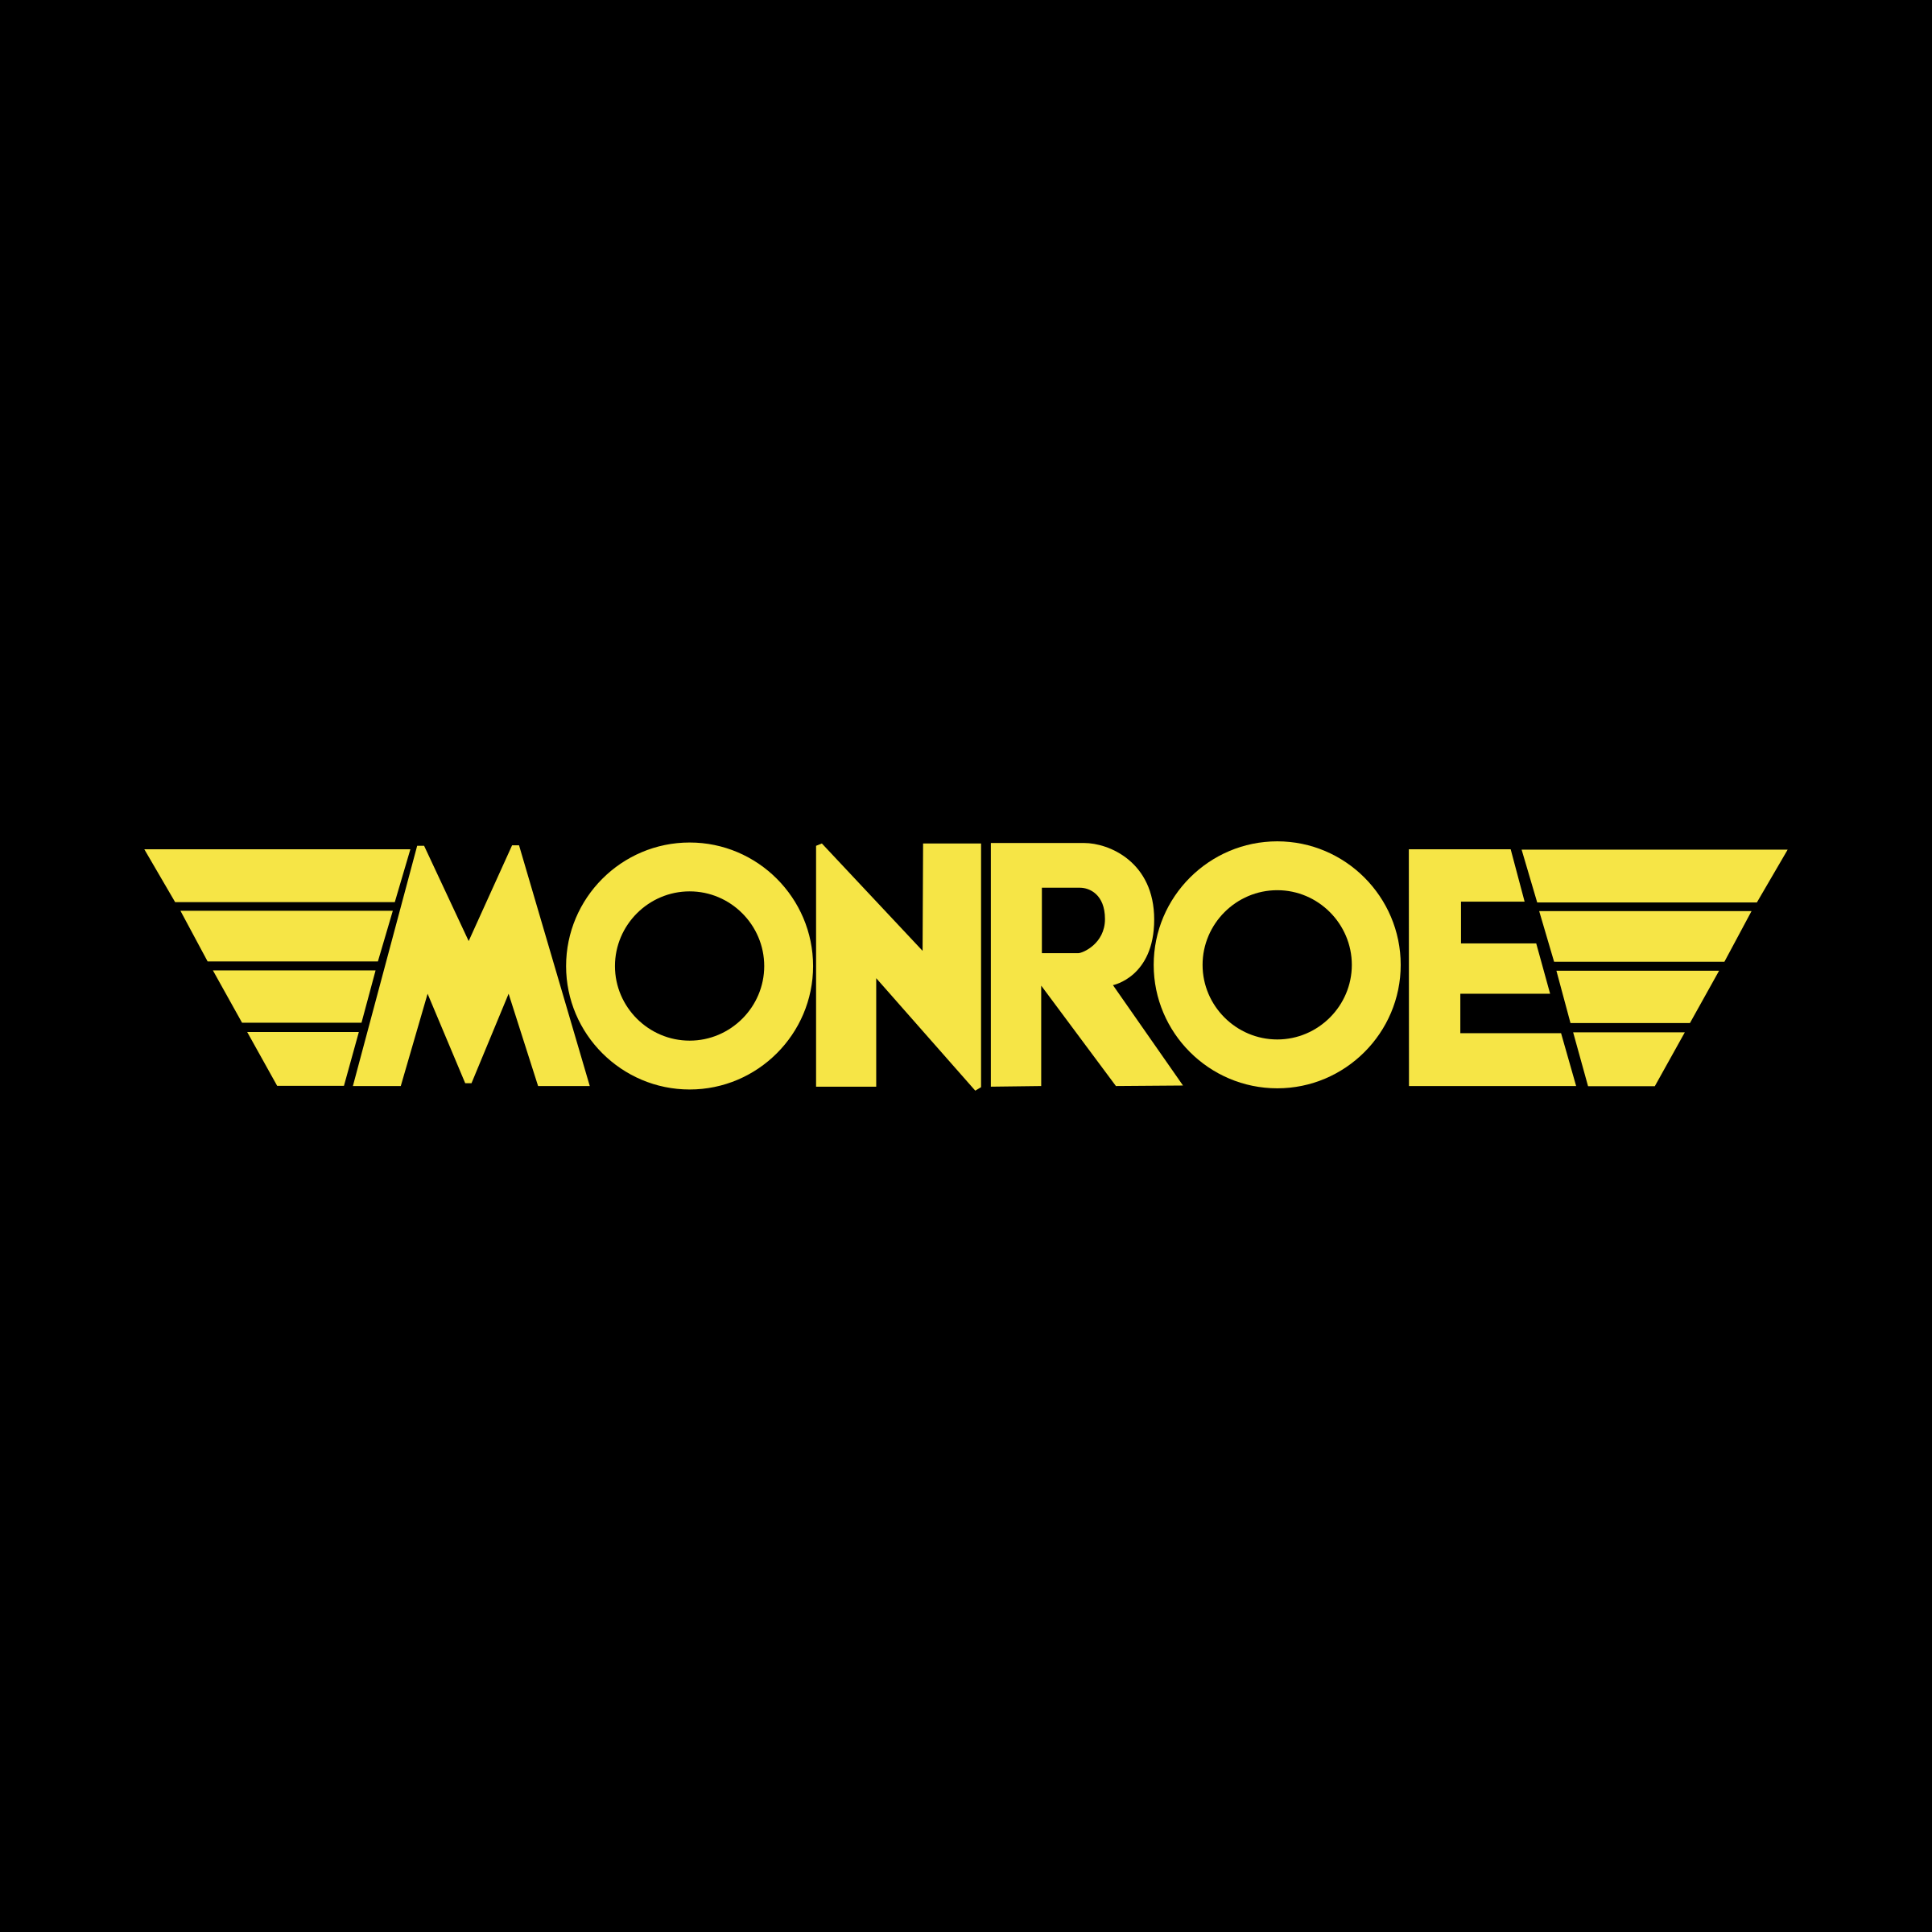 Monroe Logo - Monroe Logo PNG Transparent & SVG Vector - Freebie Supply